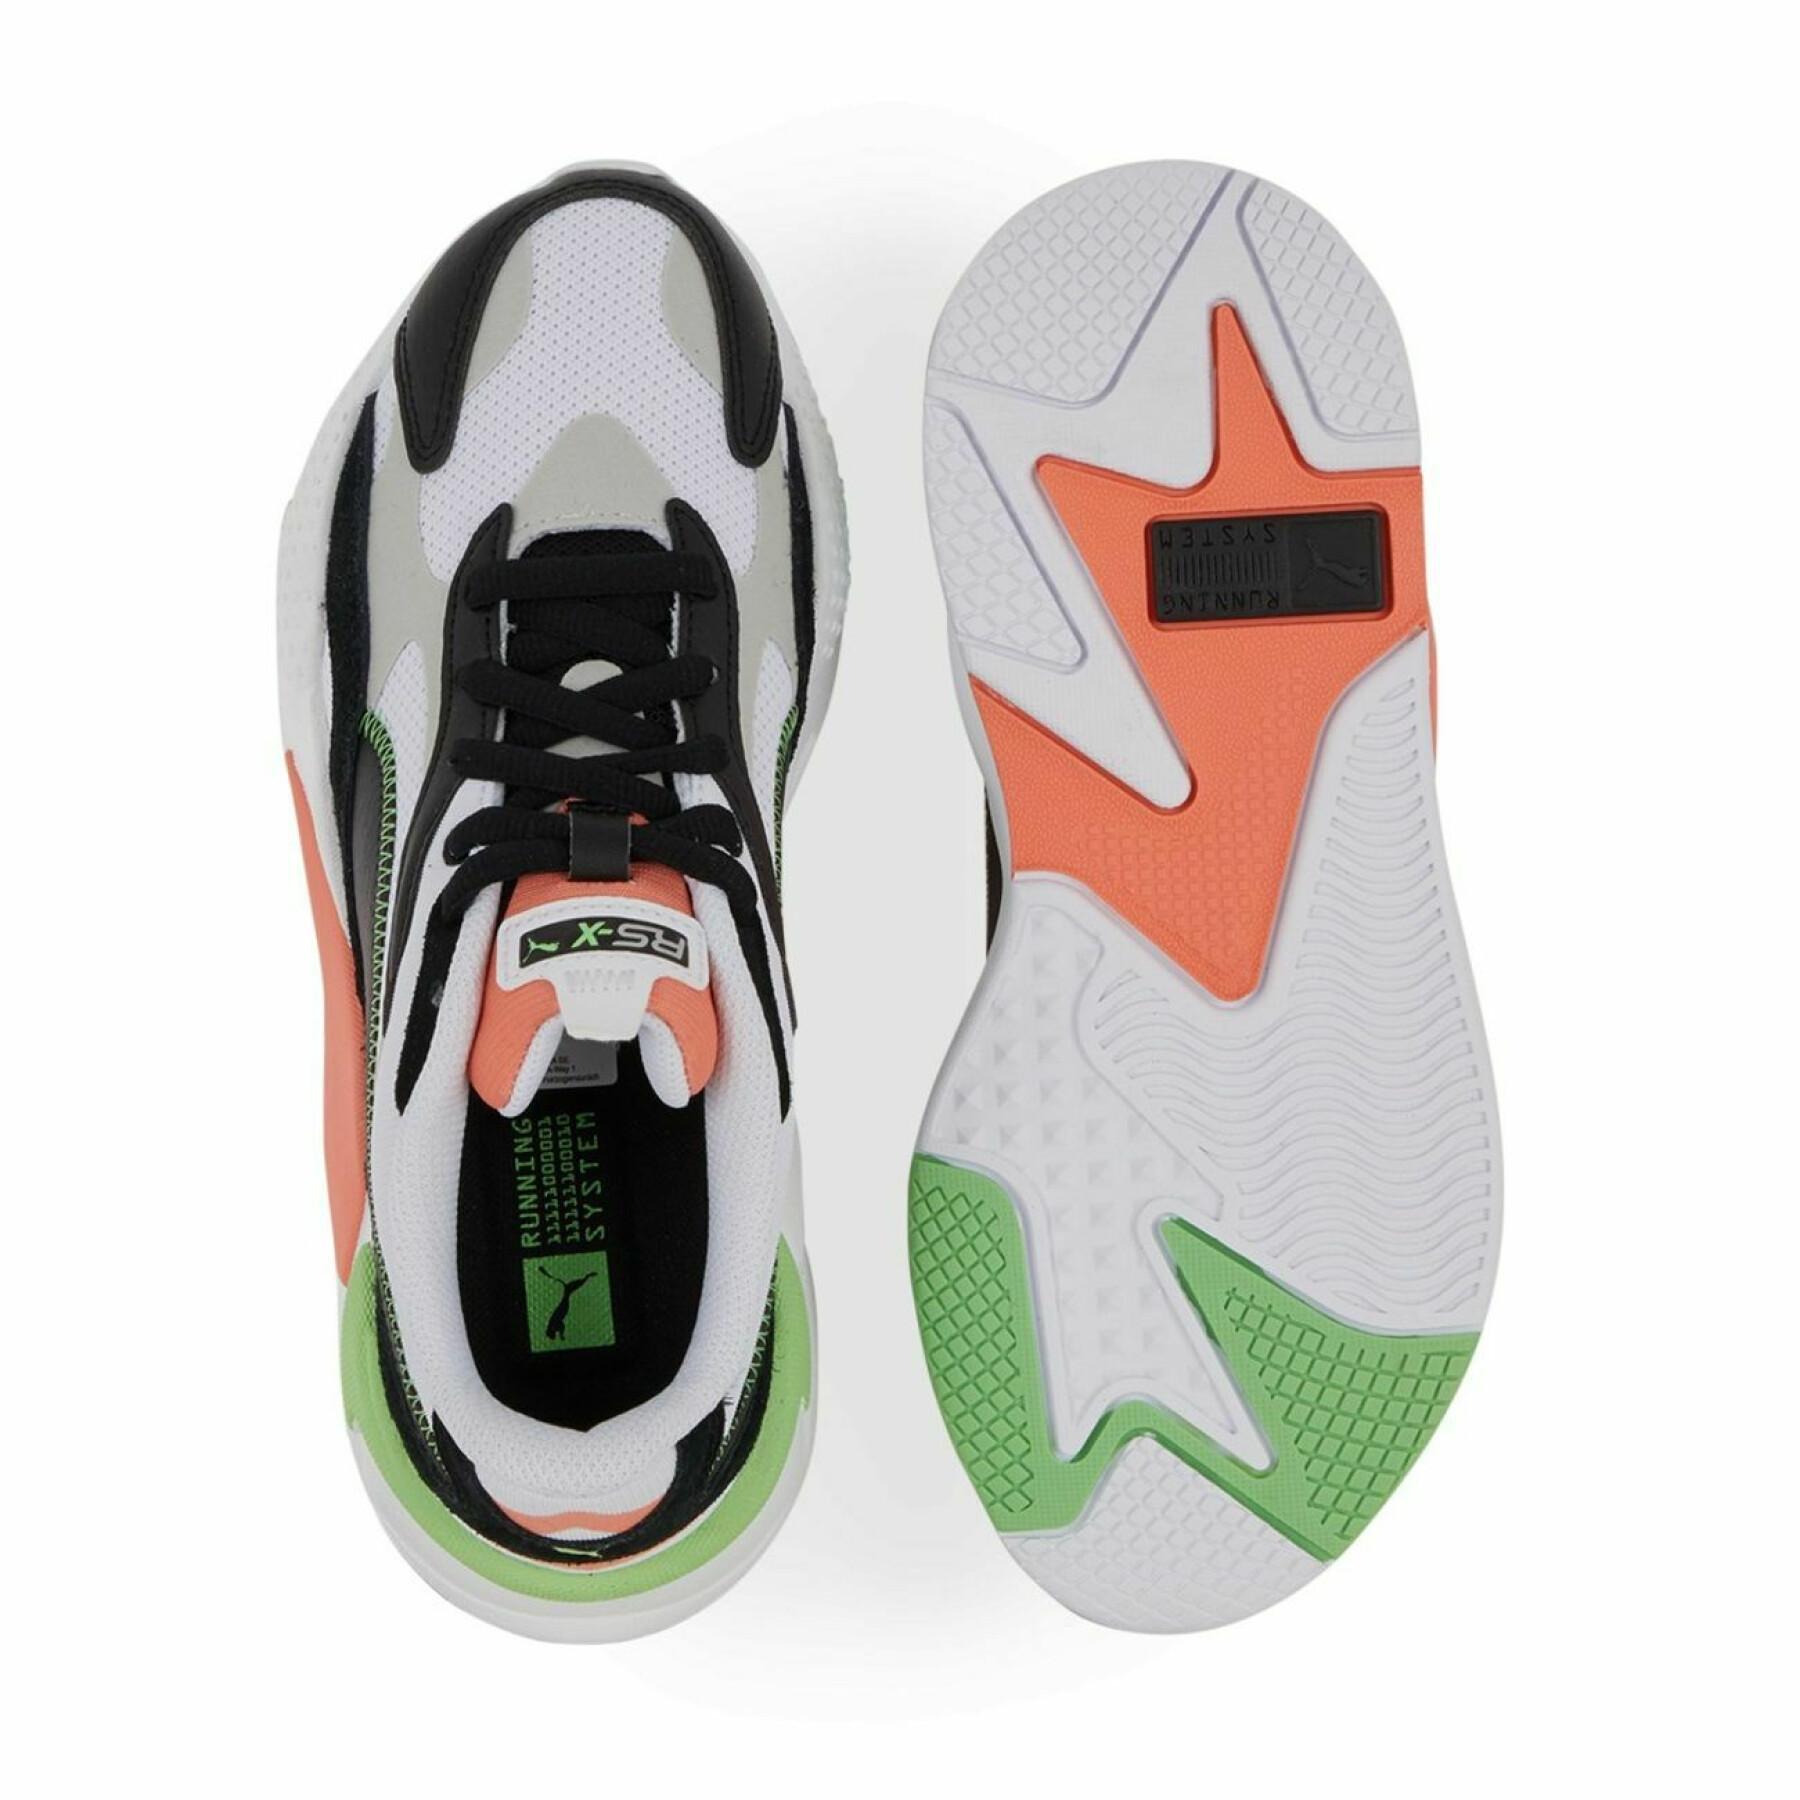 Children's sneakers Puma RS-X³ Bright